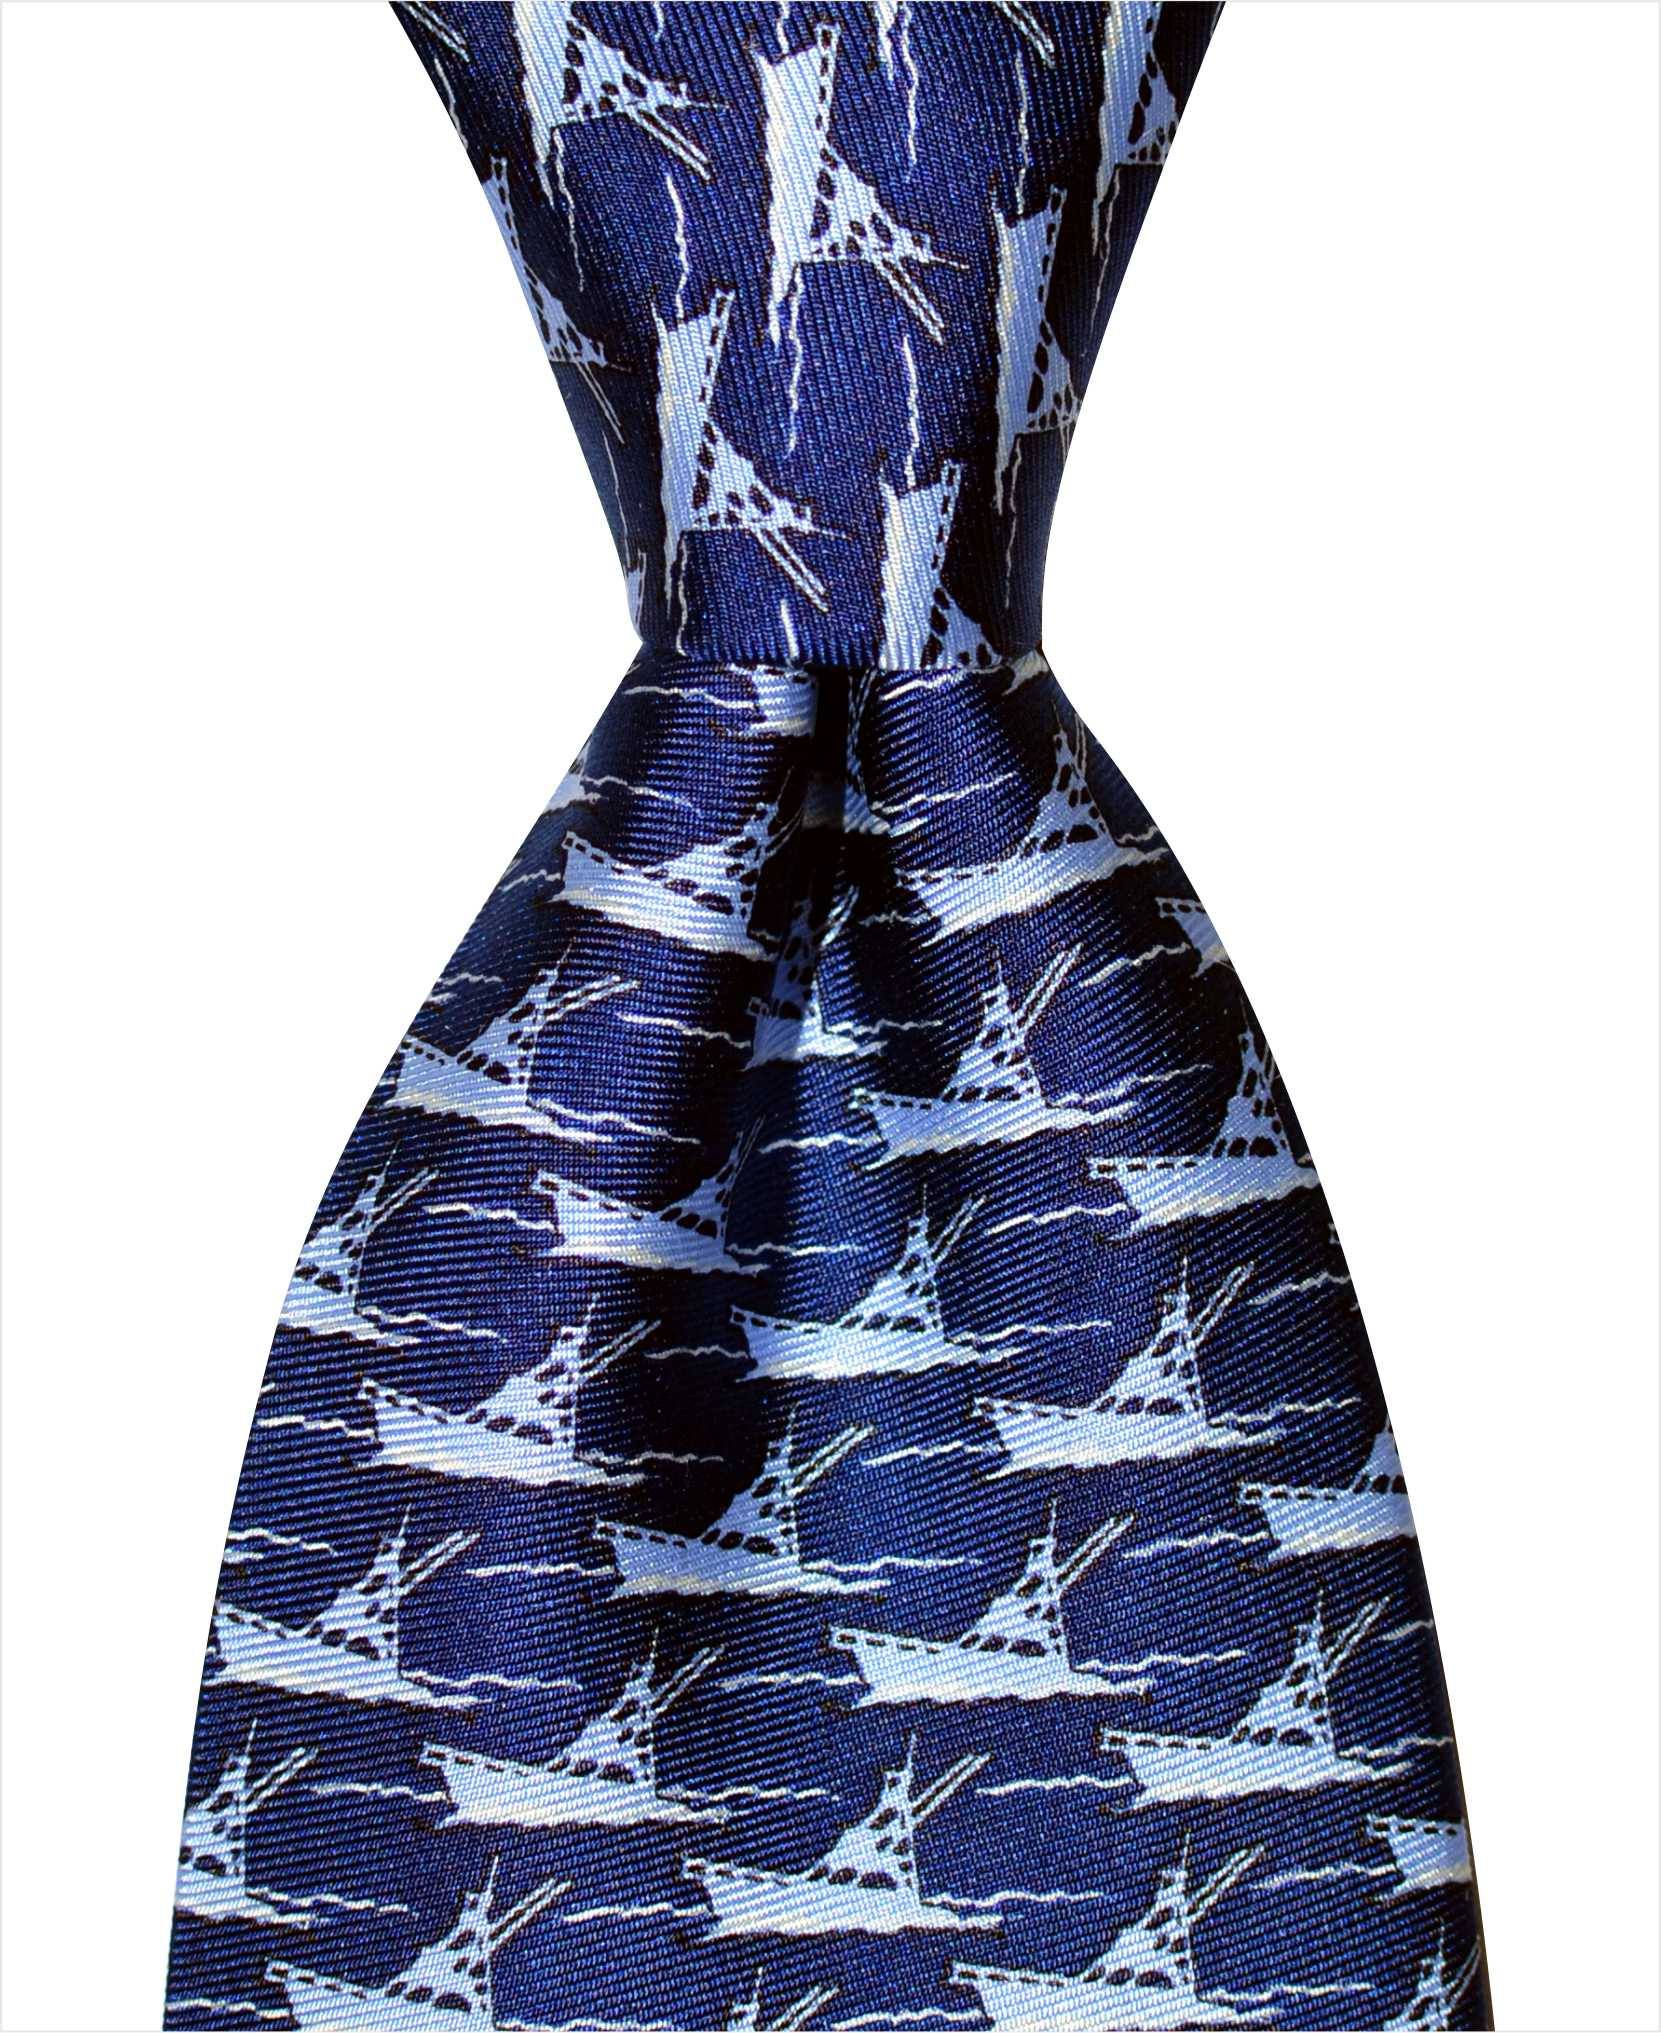 Sportfishing Boat Tie - Blue - Pelican Coast Clothing